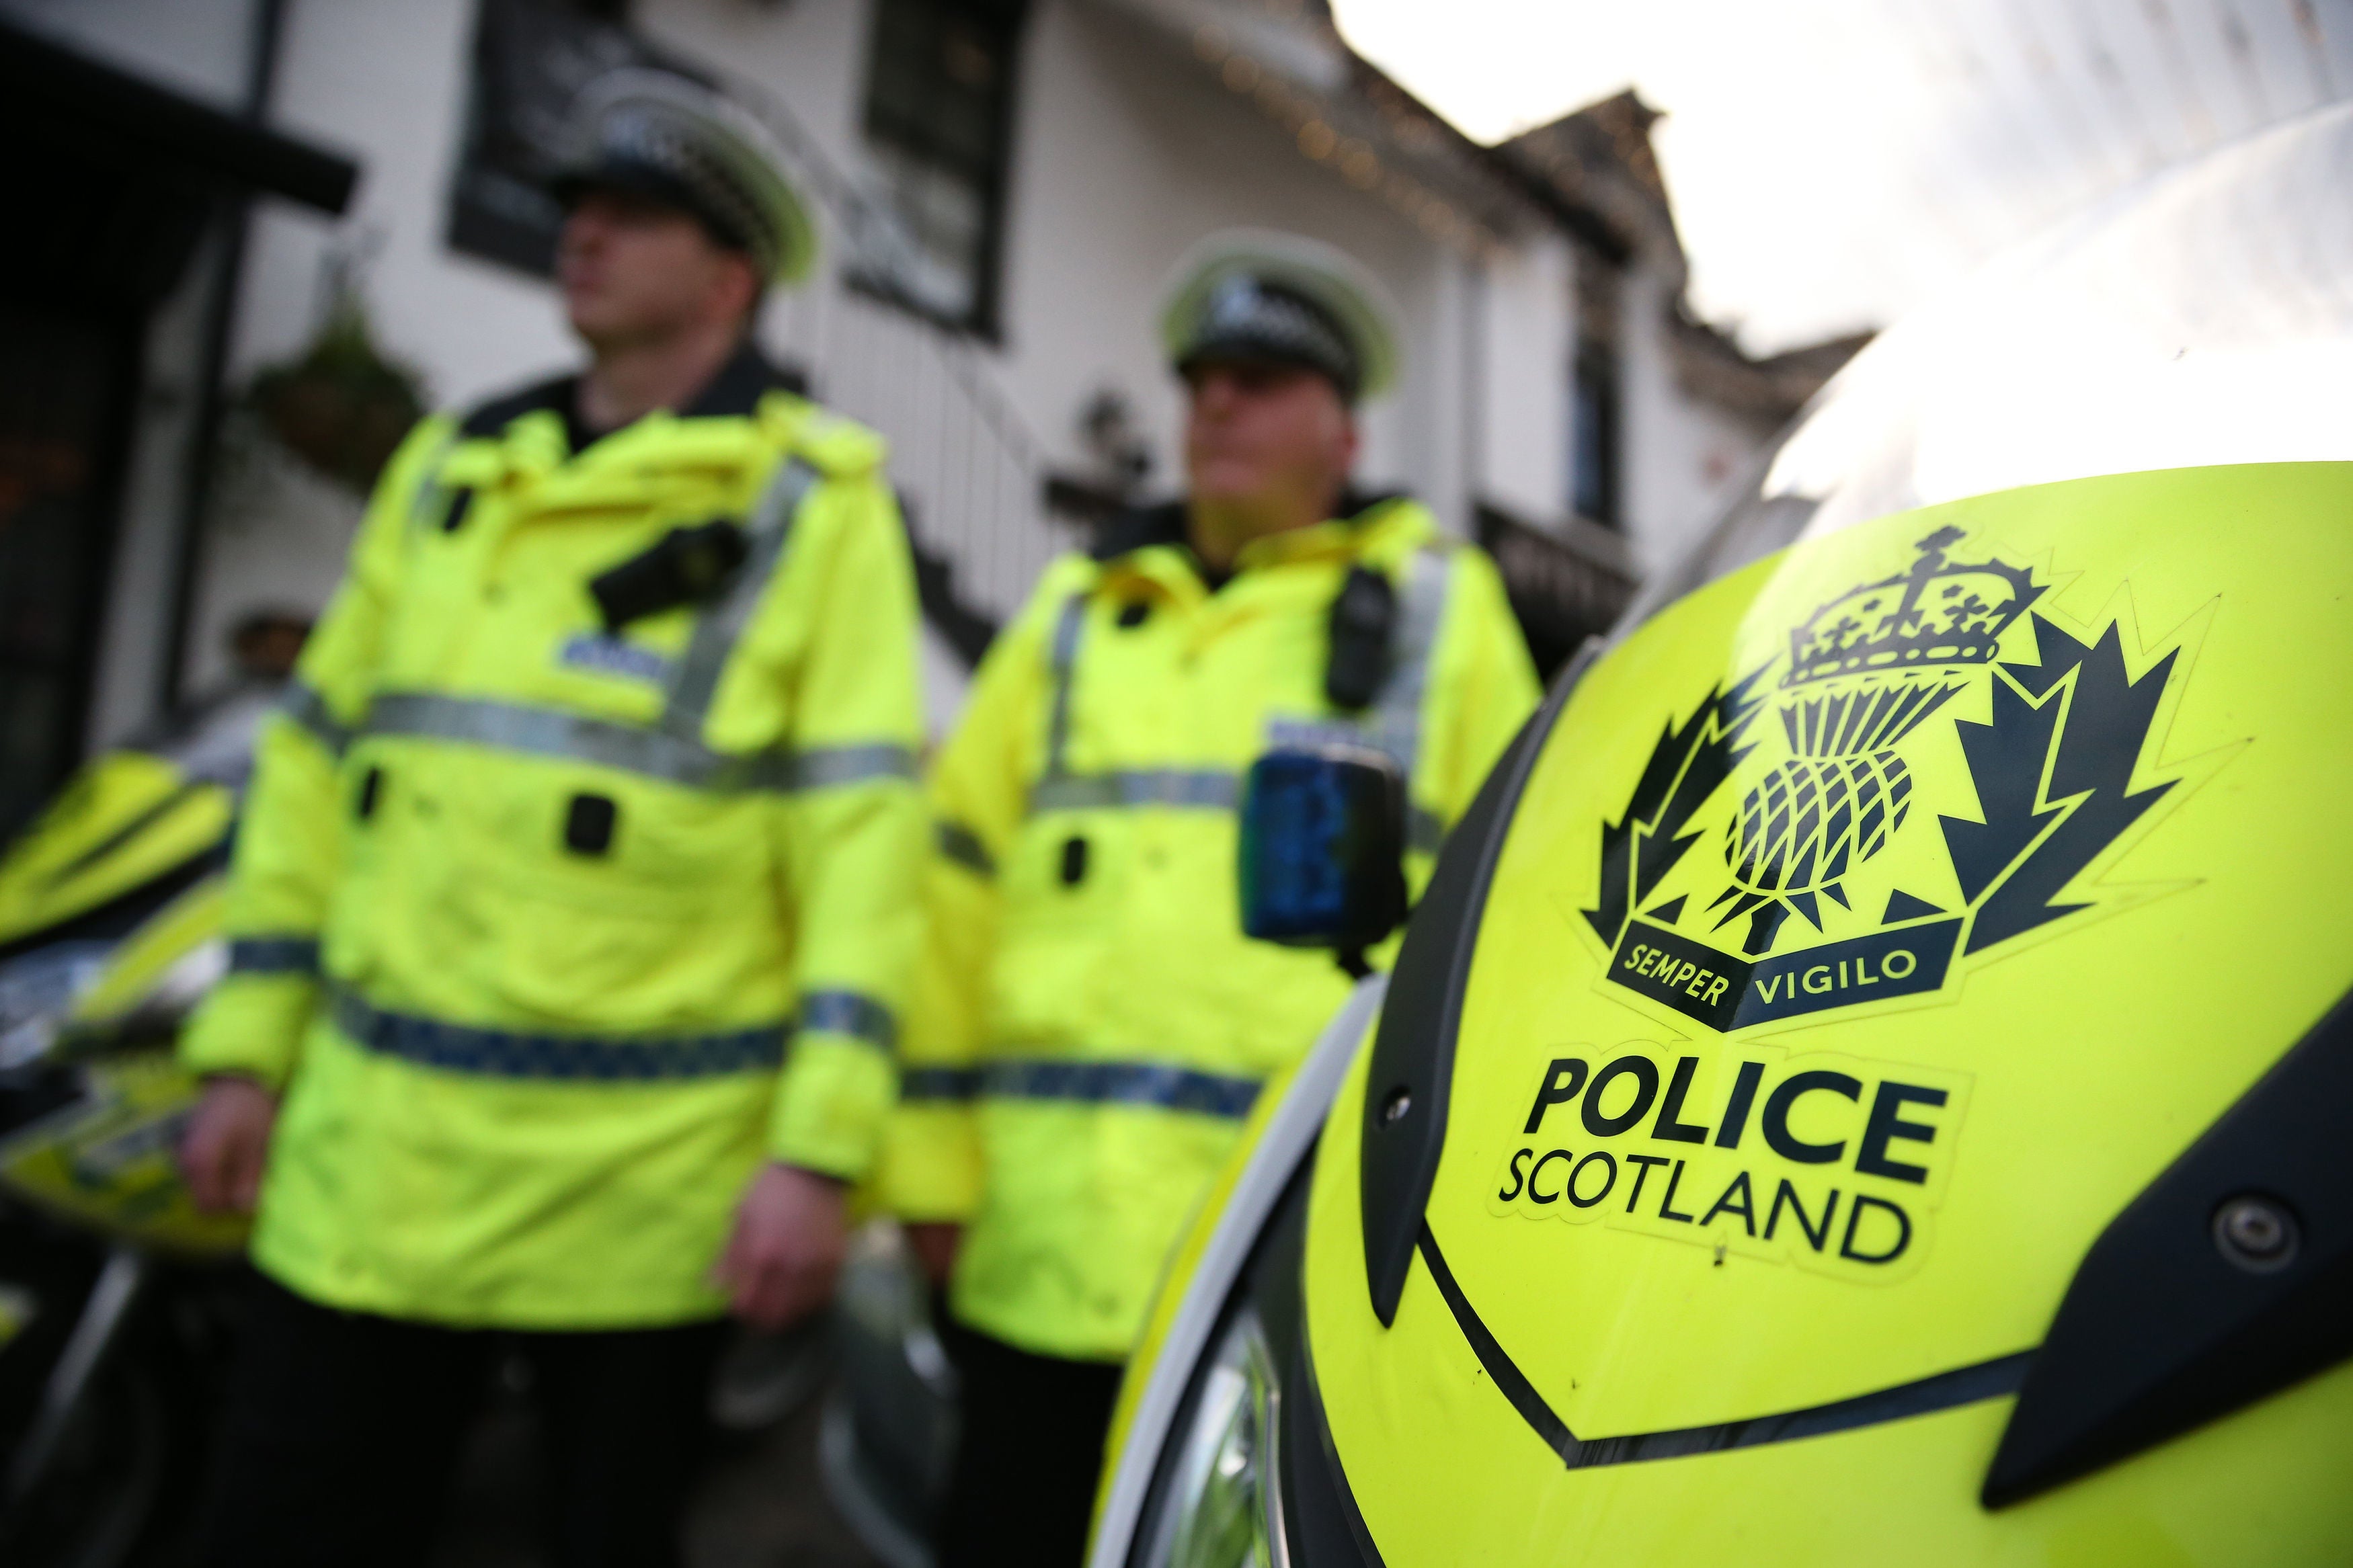 Police Scotland are investigating the latest death